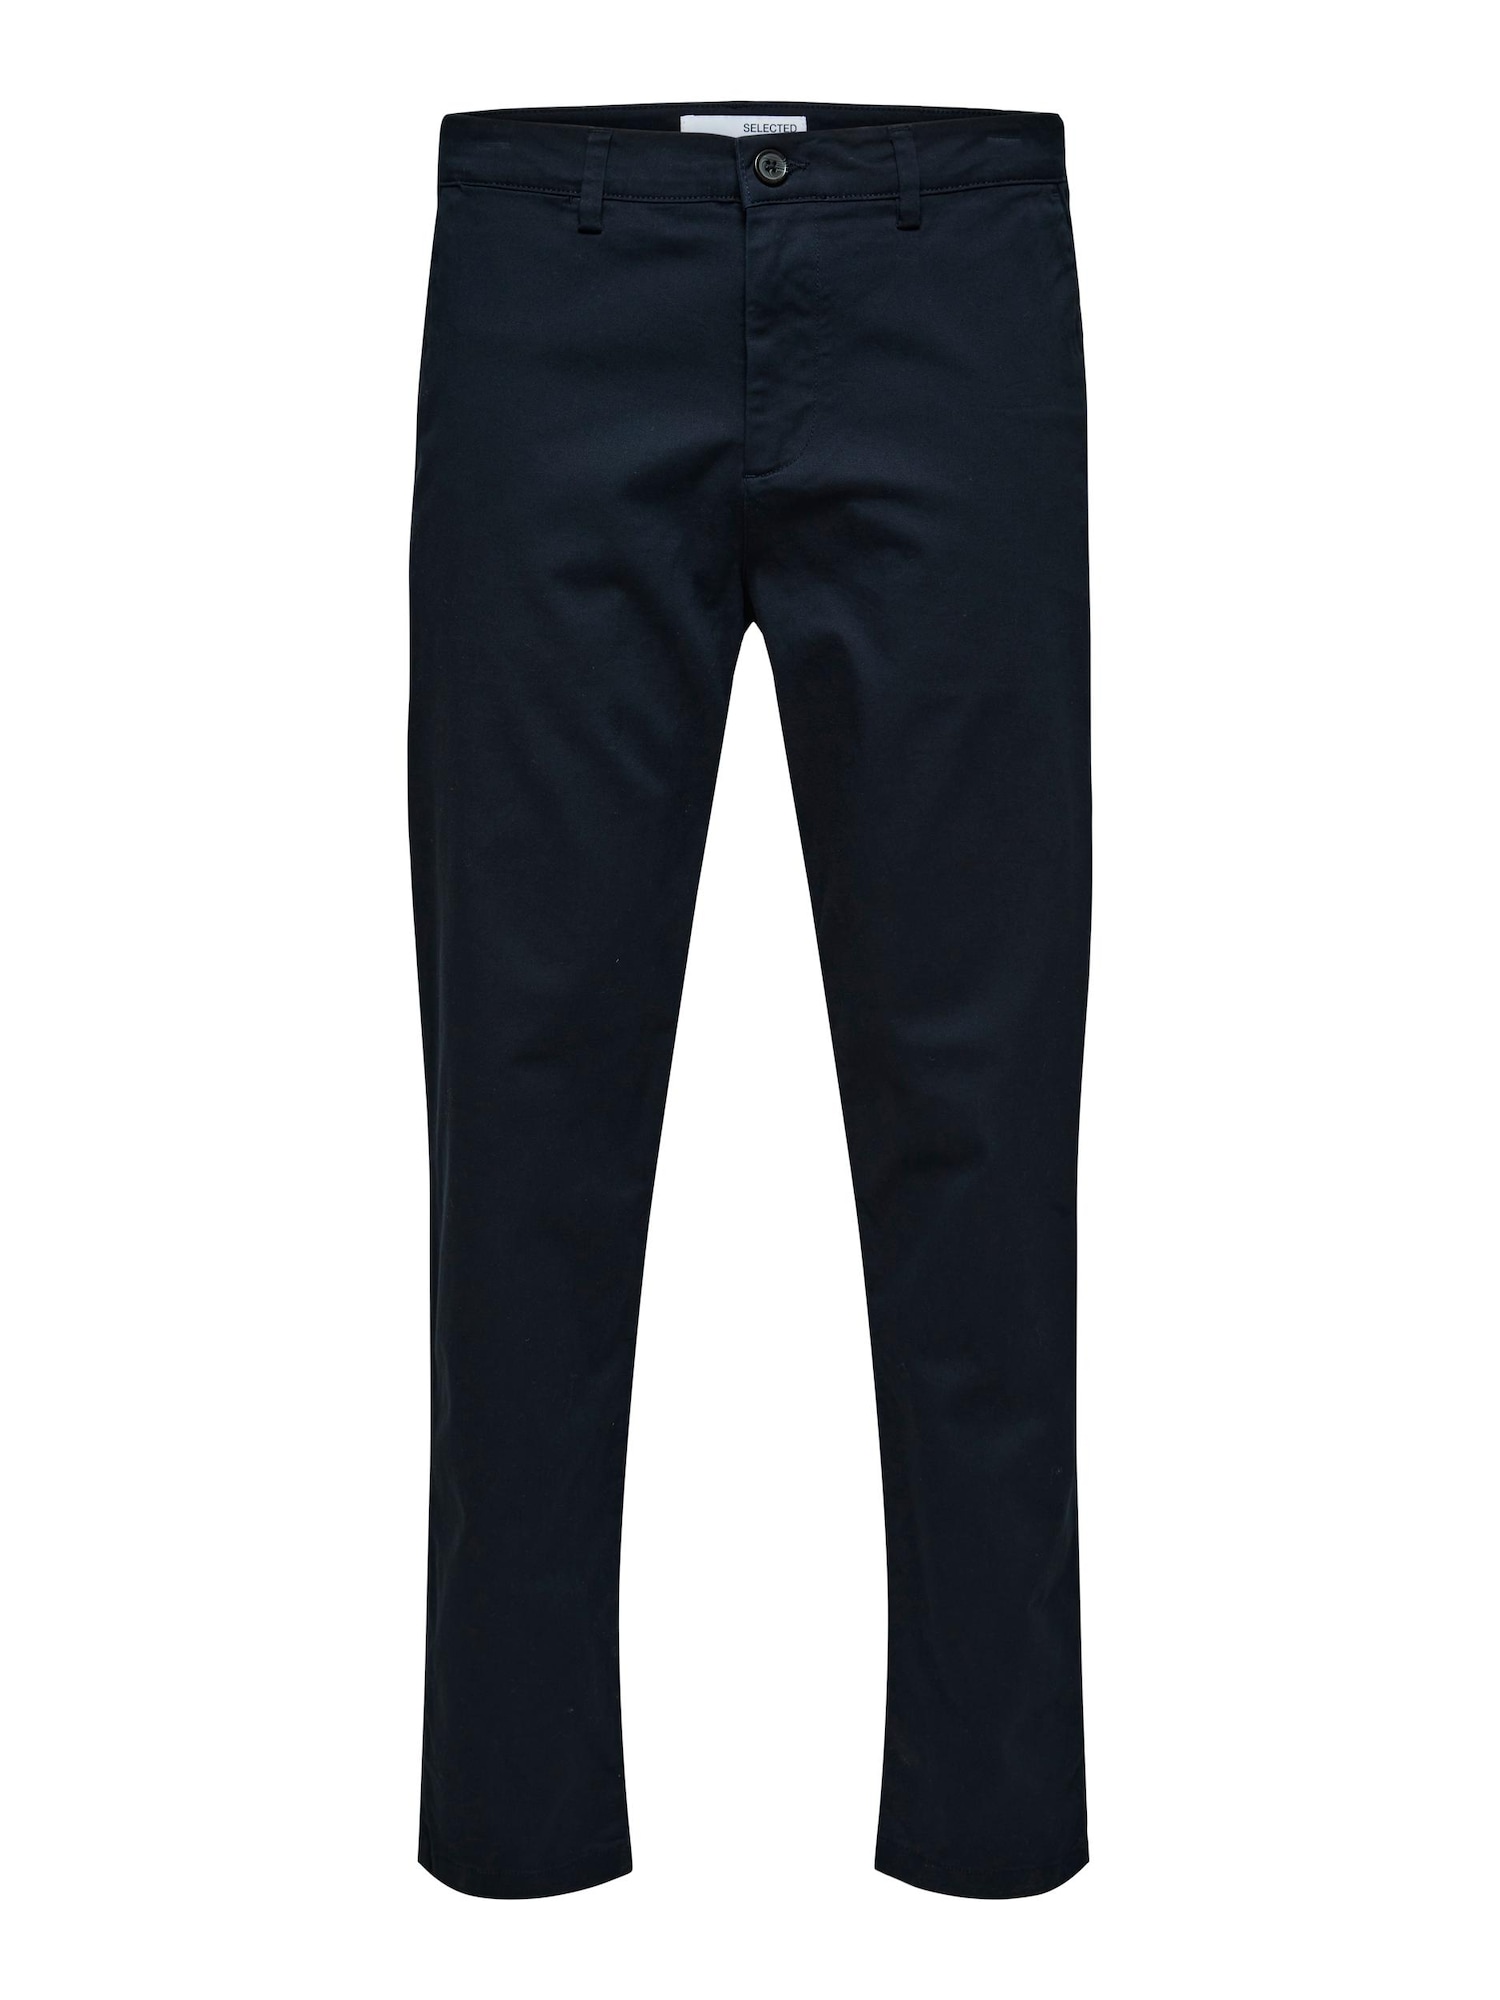 SELECTED HOMME Chino kalhoty tmavě modrá